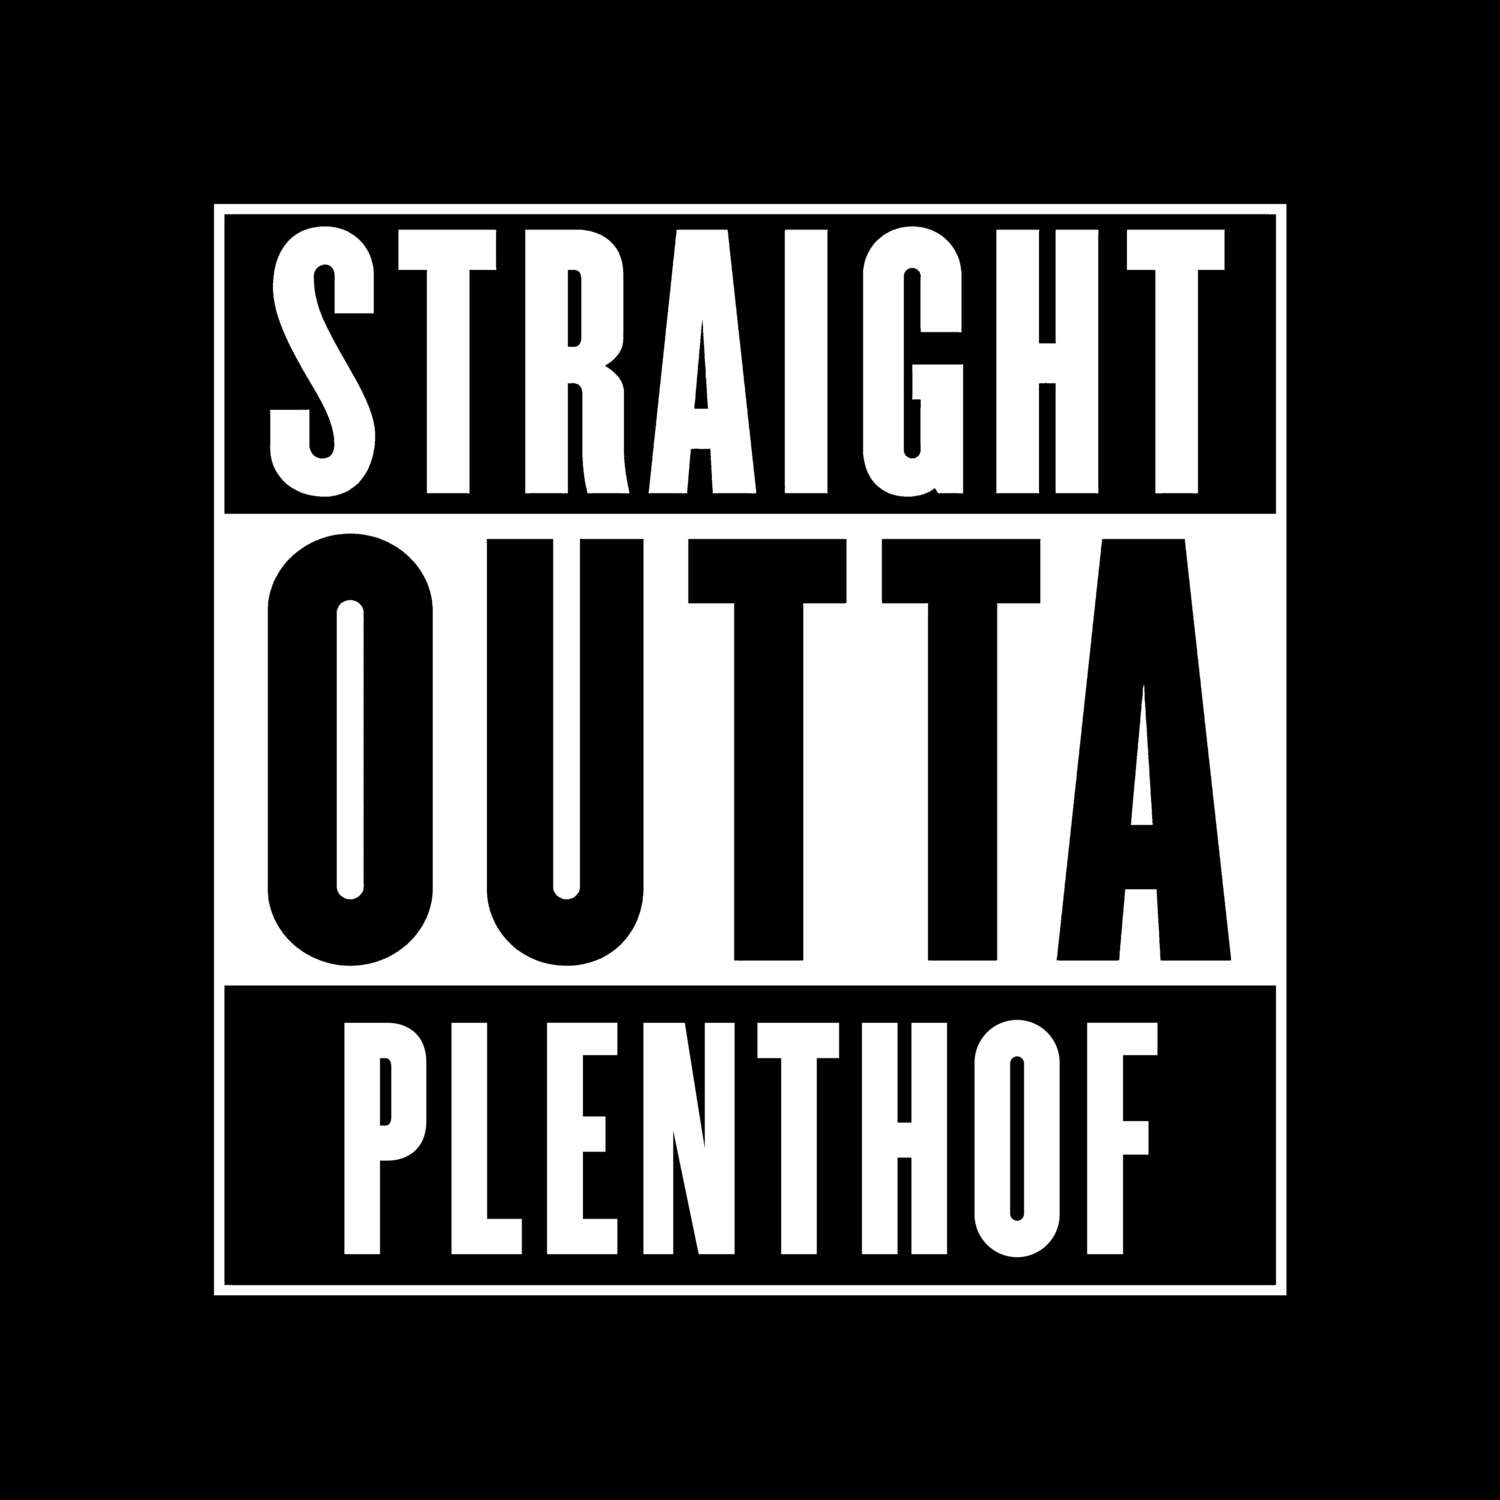 Plenthof T-Shirt »Straight Outta«